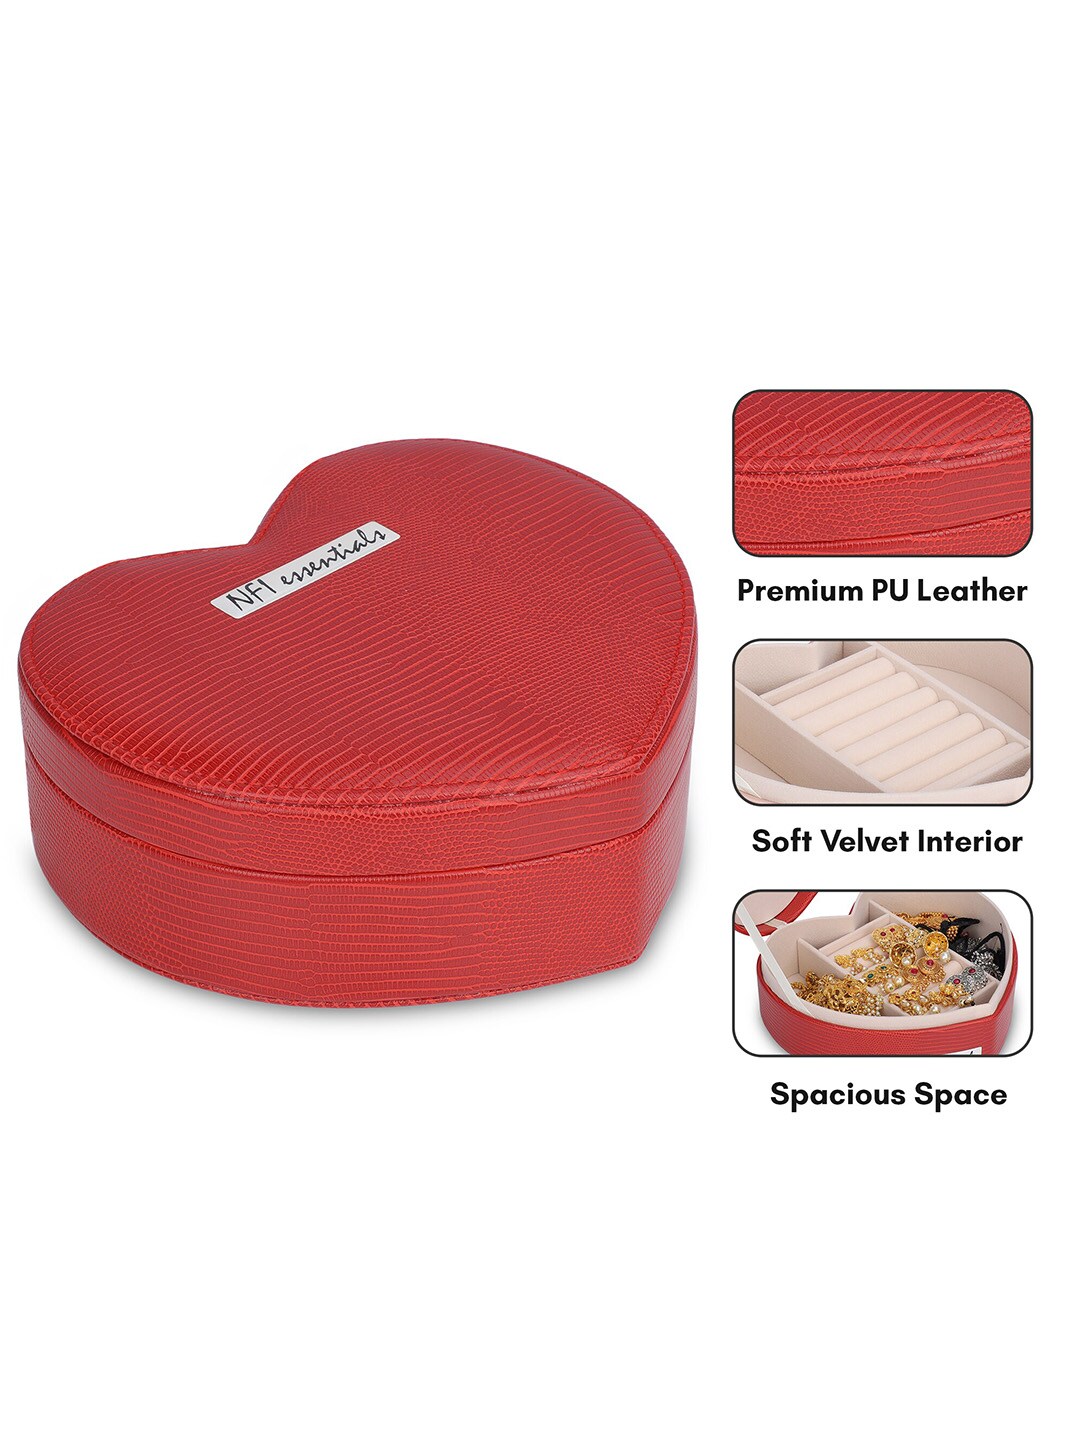 NFI essentials Women's Red Heart Shape PU Leather Travel Jewellery Storage Box Organizer Price in India